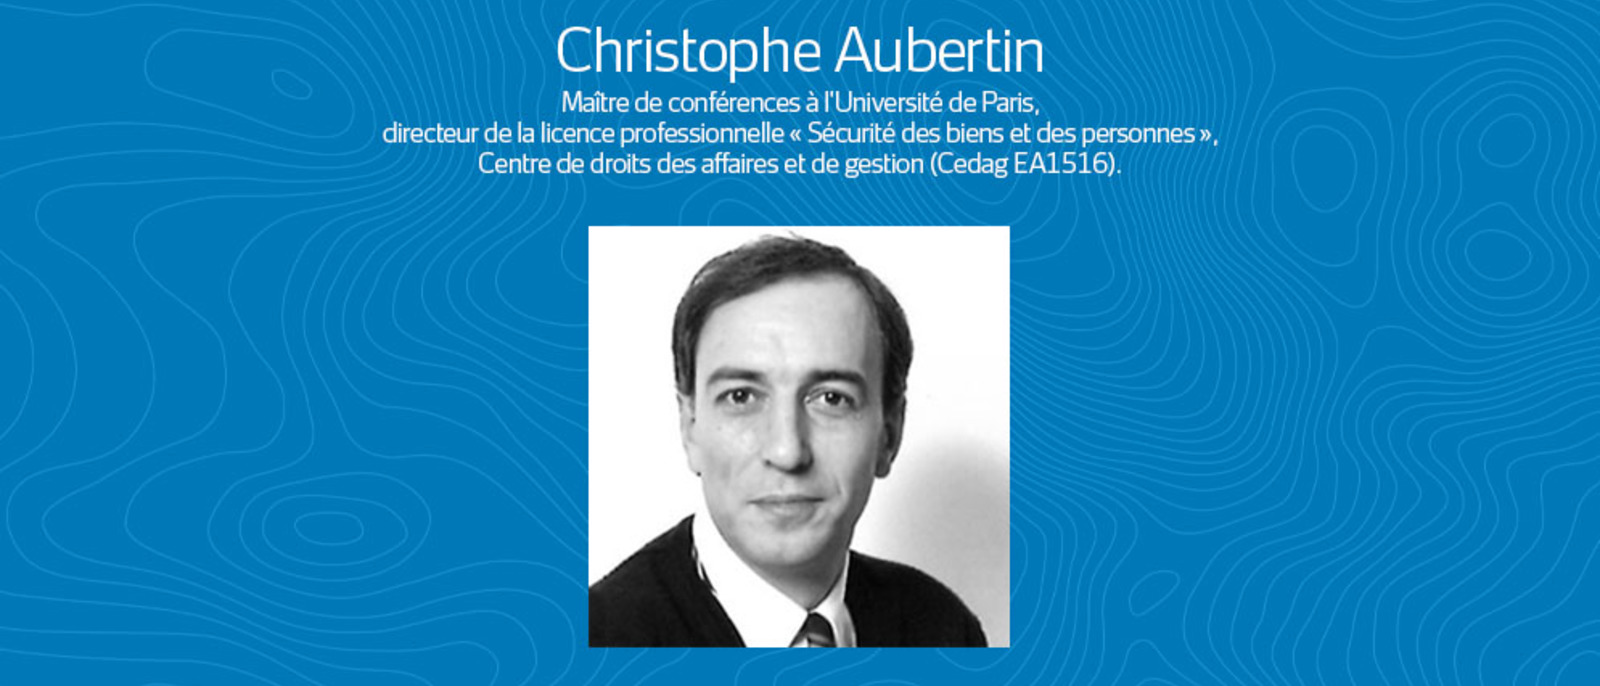 Christophe Aubertin